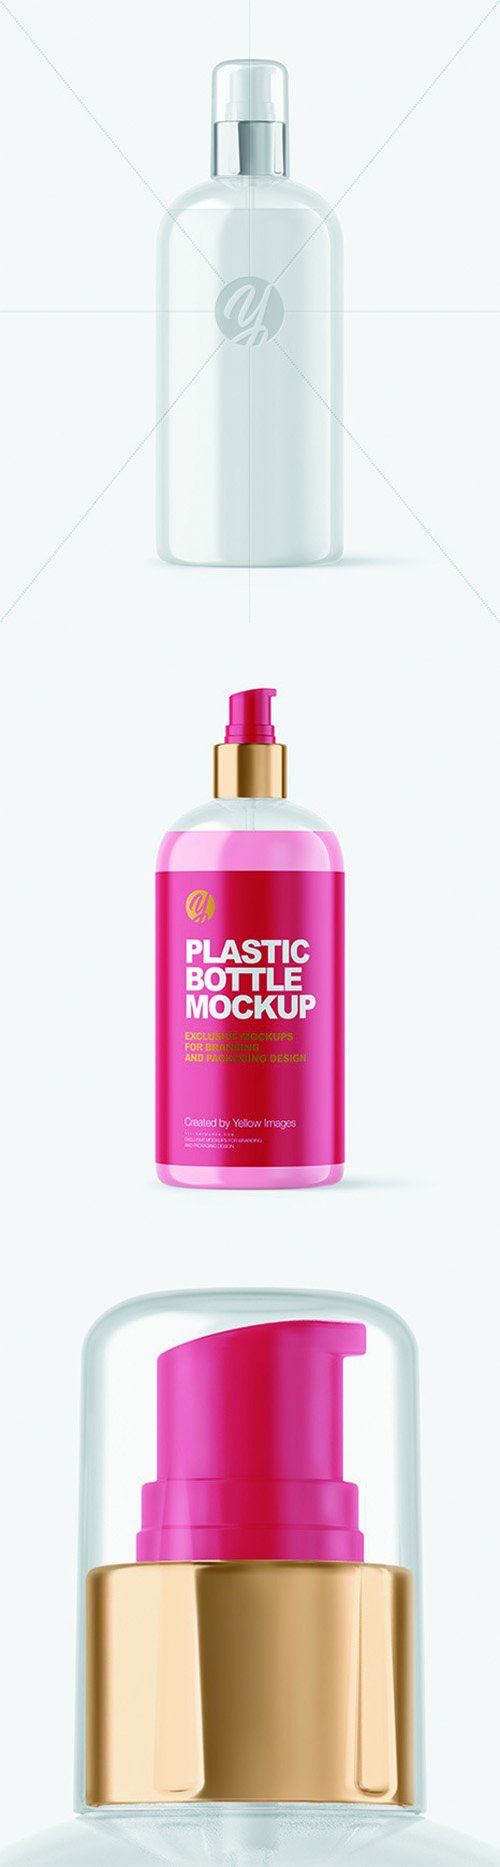 Clear Liquid Soap Bottle with Pump Mockup 66360 TIF